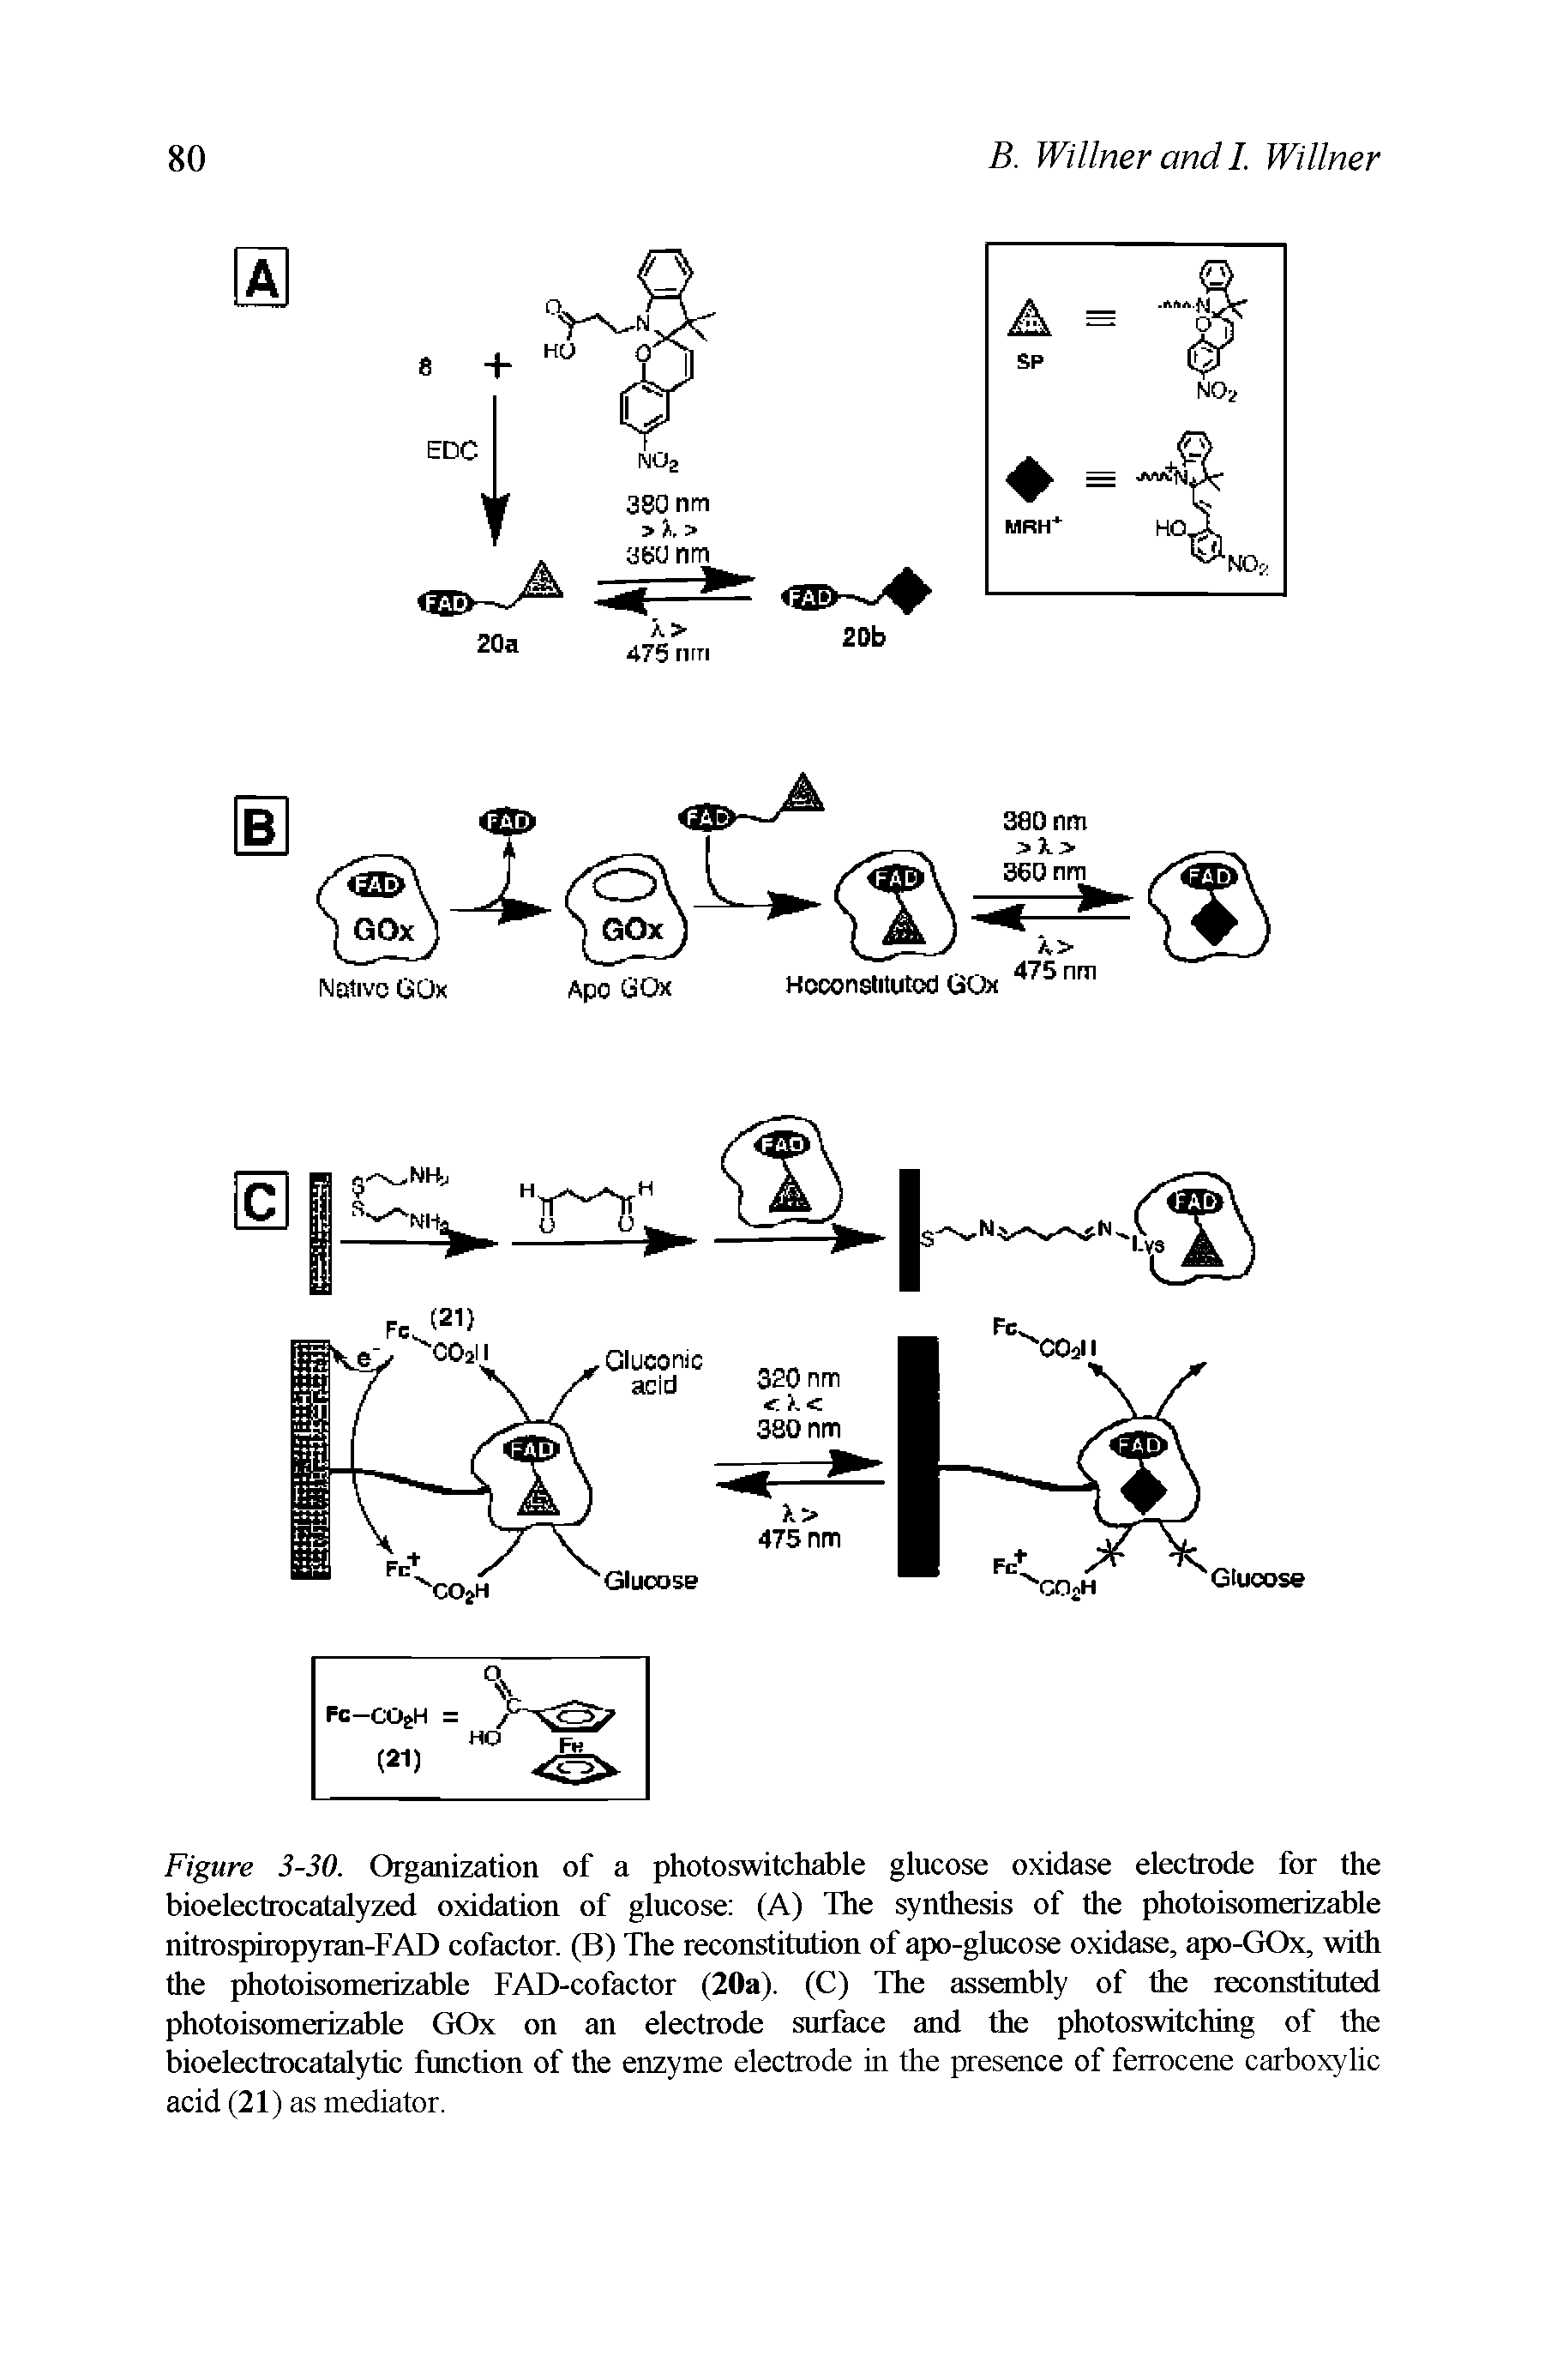 Figure 3-30. Organization of a photoswitchable glucose oxidase electrode for the bioelectrocatalyzed oxidation of glucose (A) The synthesis of the photoisomerizable nitrospiropyran-FAD cofactor. (B) The reconstitution of apo-glucose oxidase, apo-GOx, with the photoisomerizable FAD-cofactor (20a). (C) The assembly of the reconstituted photoisomerizable GOx on an electrode surface and the photoswitching of the bioelectrocatalytic function of the enzyme electrode in the presence of ferrocene carboxylic acid (21) as mediator.